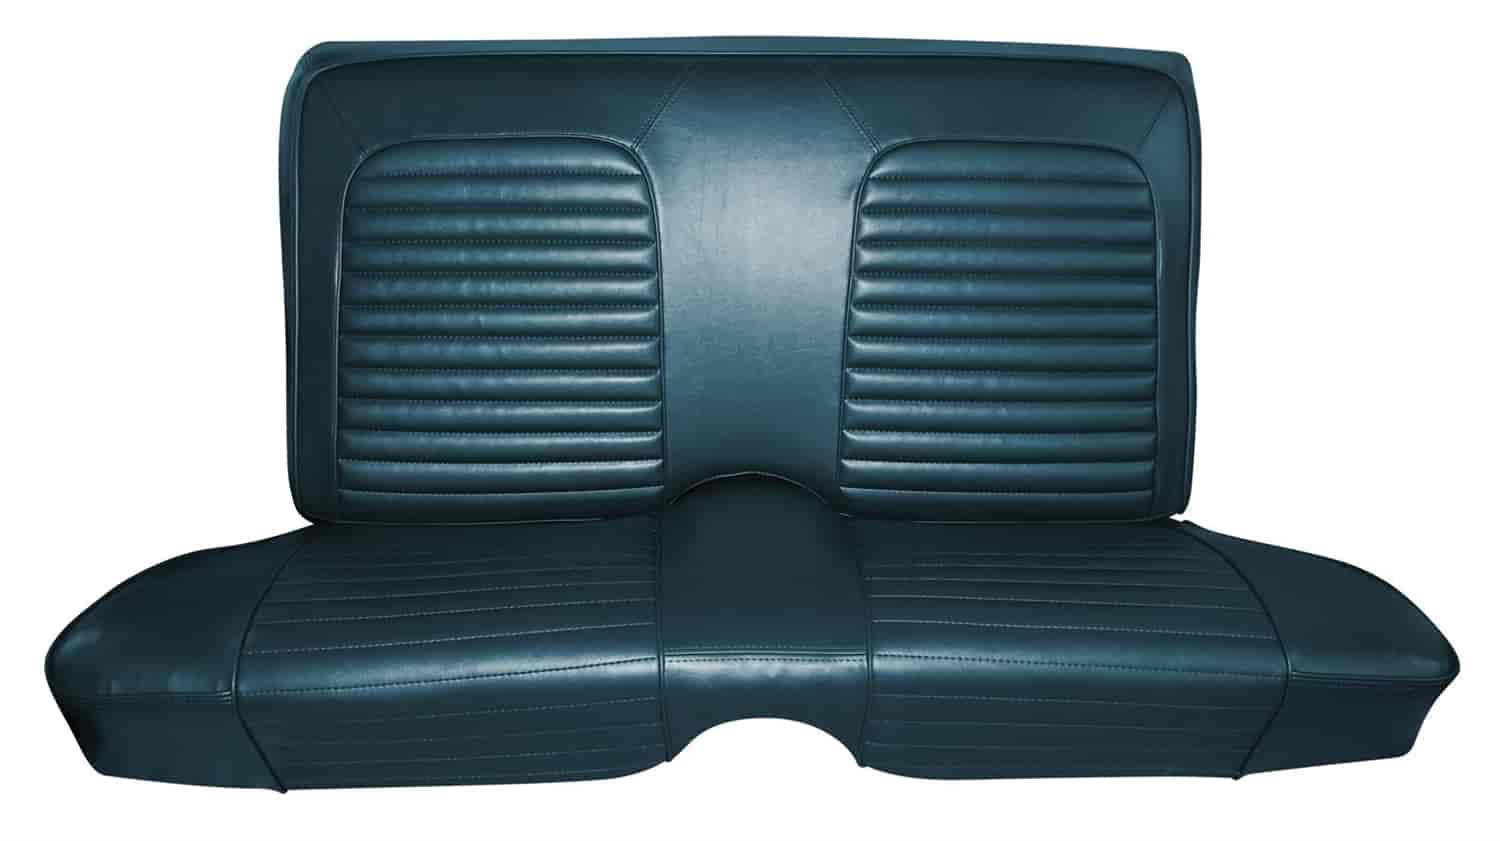 1964 Ford Falcon Futura 2-Door Hardtop Interior Front Bucket and Rear Bench Seat Upholstery Set